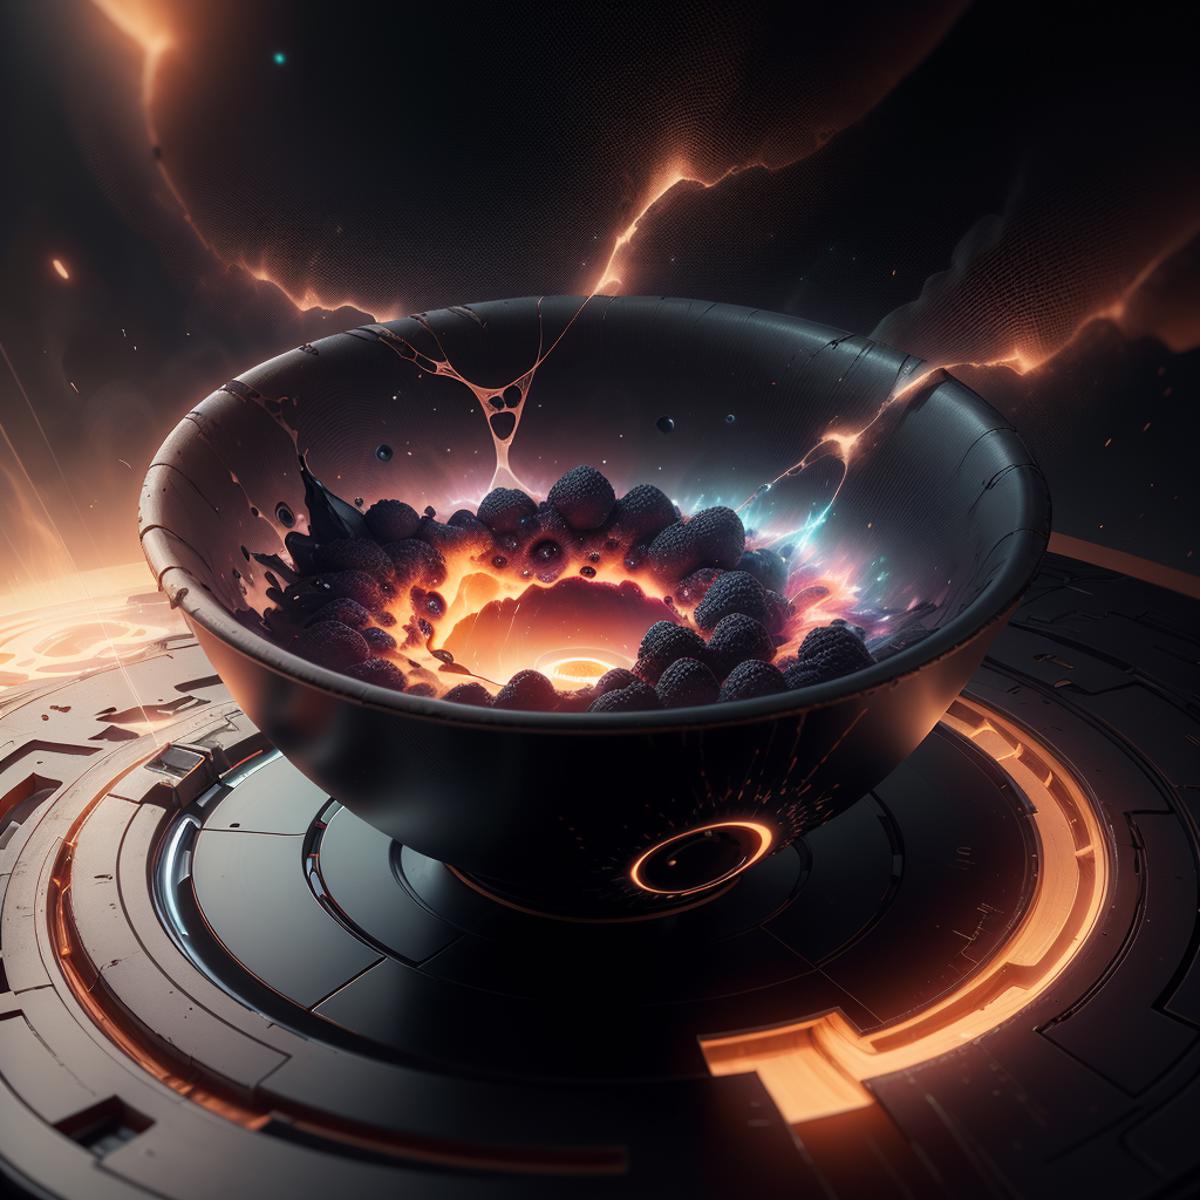 Infra Blackhole tech - World Morph image by navimixu